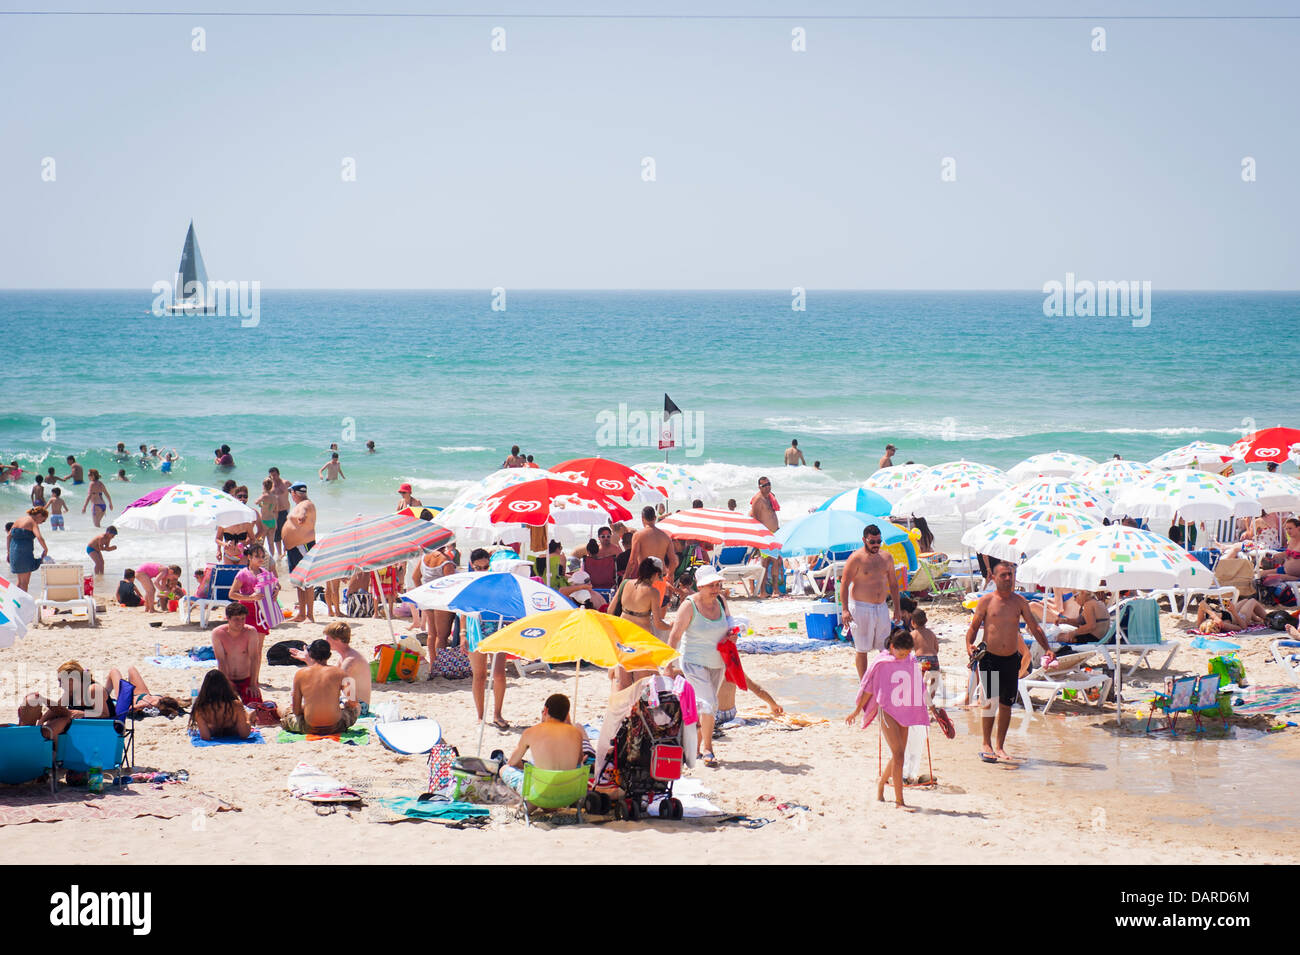 Israel Tel Aviv Jaffa Yafo Manta Ray Beach crowds under parasols umbrellas sonnenschirm sand sea sunbathers sunbathers Stock Photo